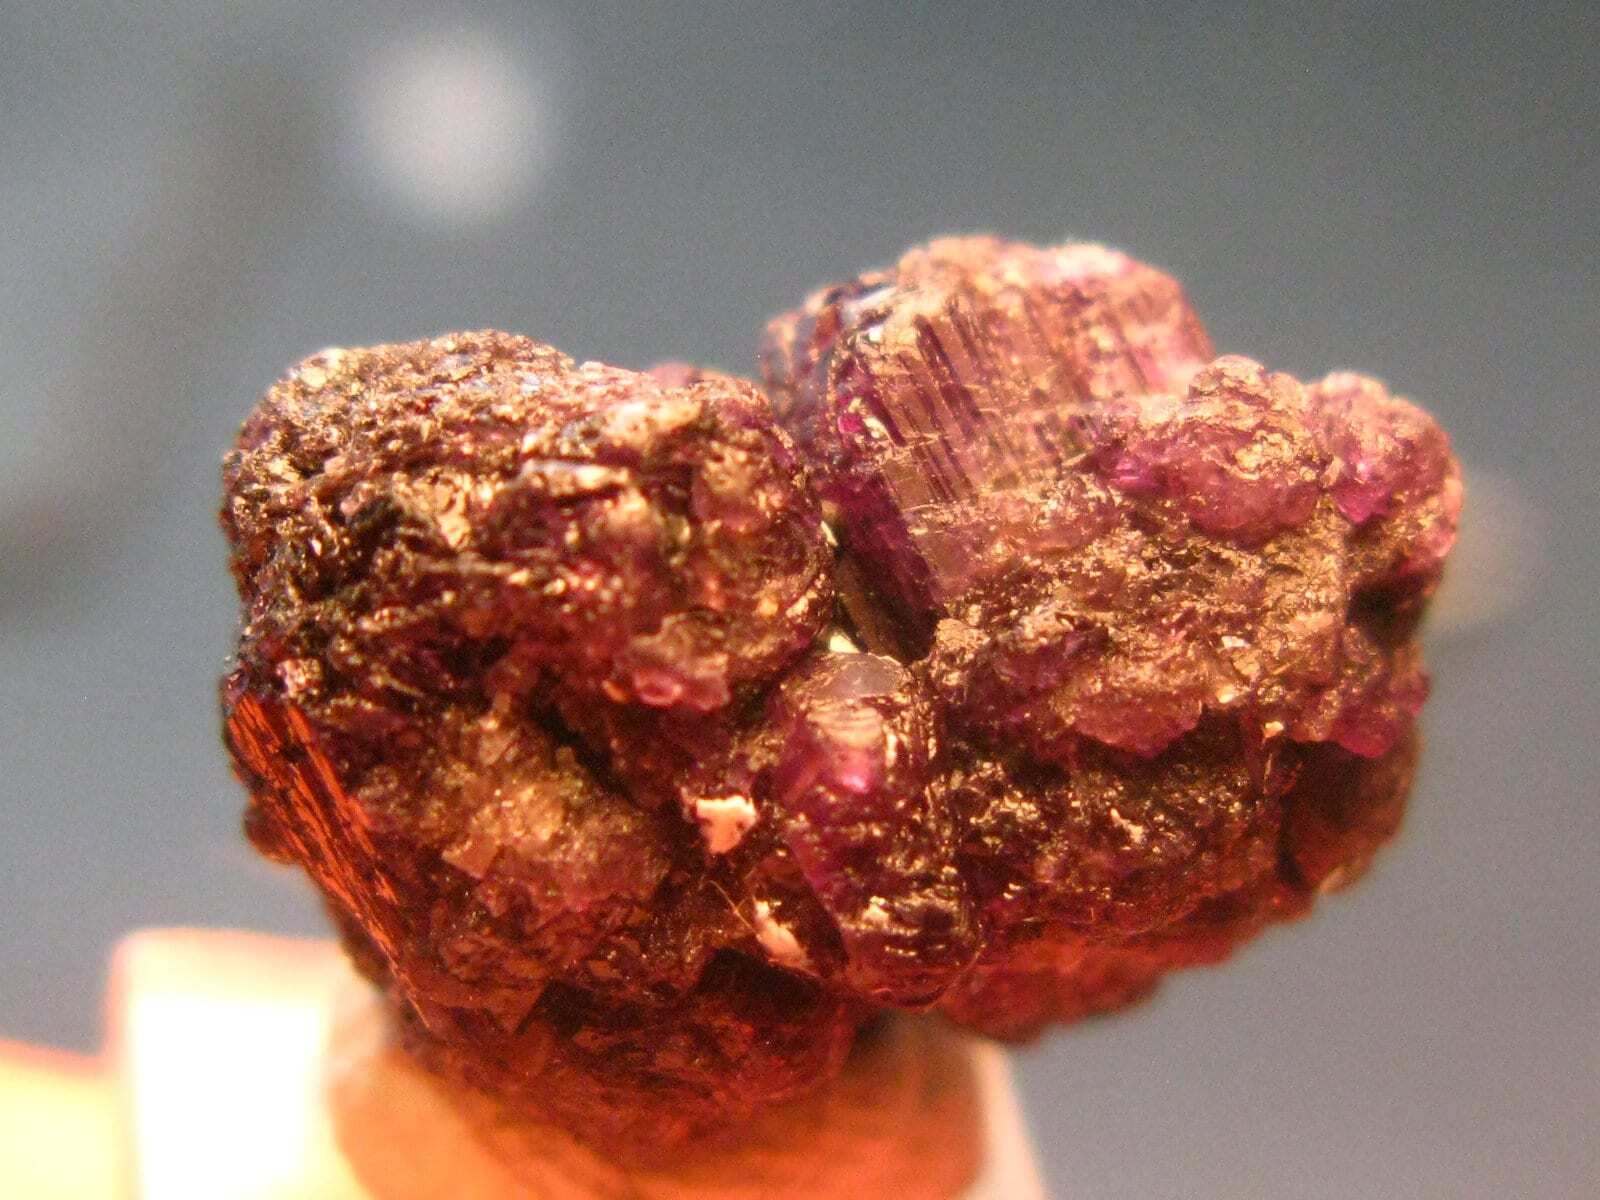 Large Alexandrite Chrysoberyl Crystal From Zimbabwe - 0.8\